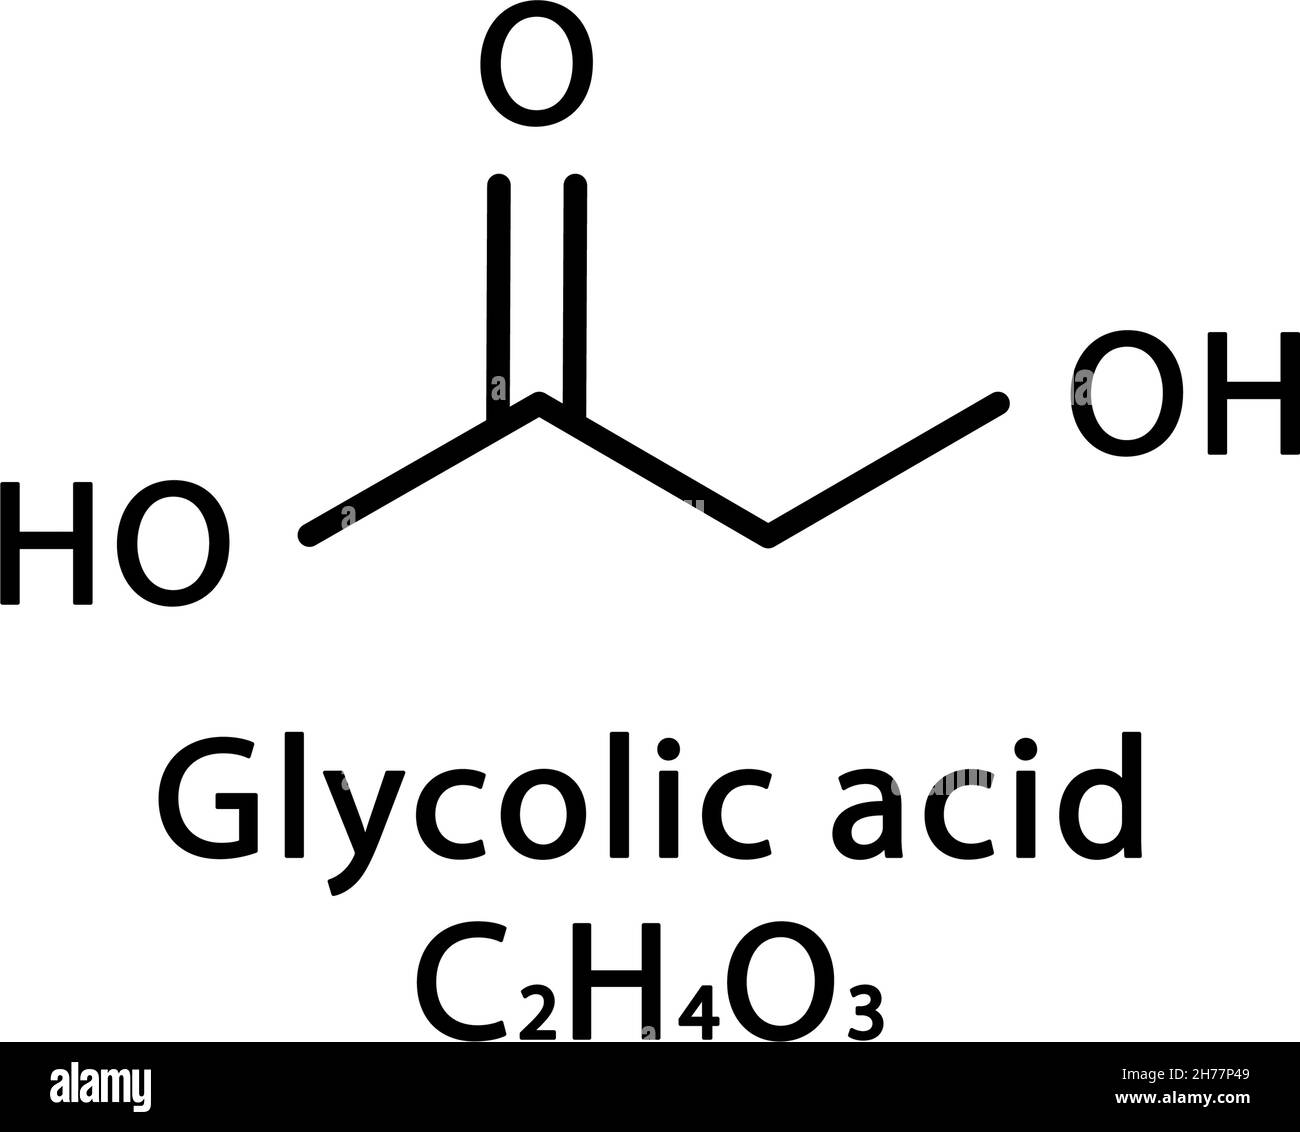 Химическая формула мочи человека. Omega hydroxy acid. Цитрат и лактат химическая формула. Producing Glycolic acid from biomass.